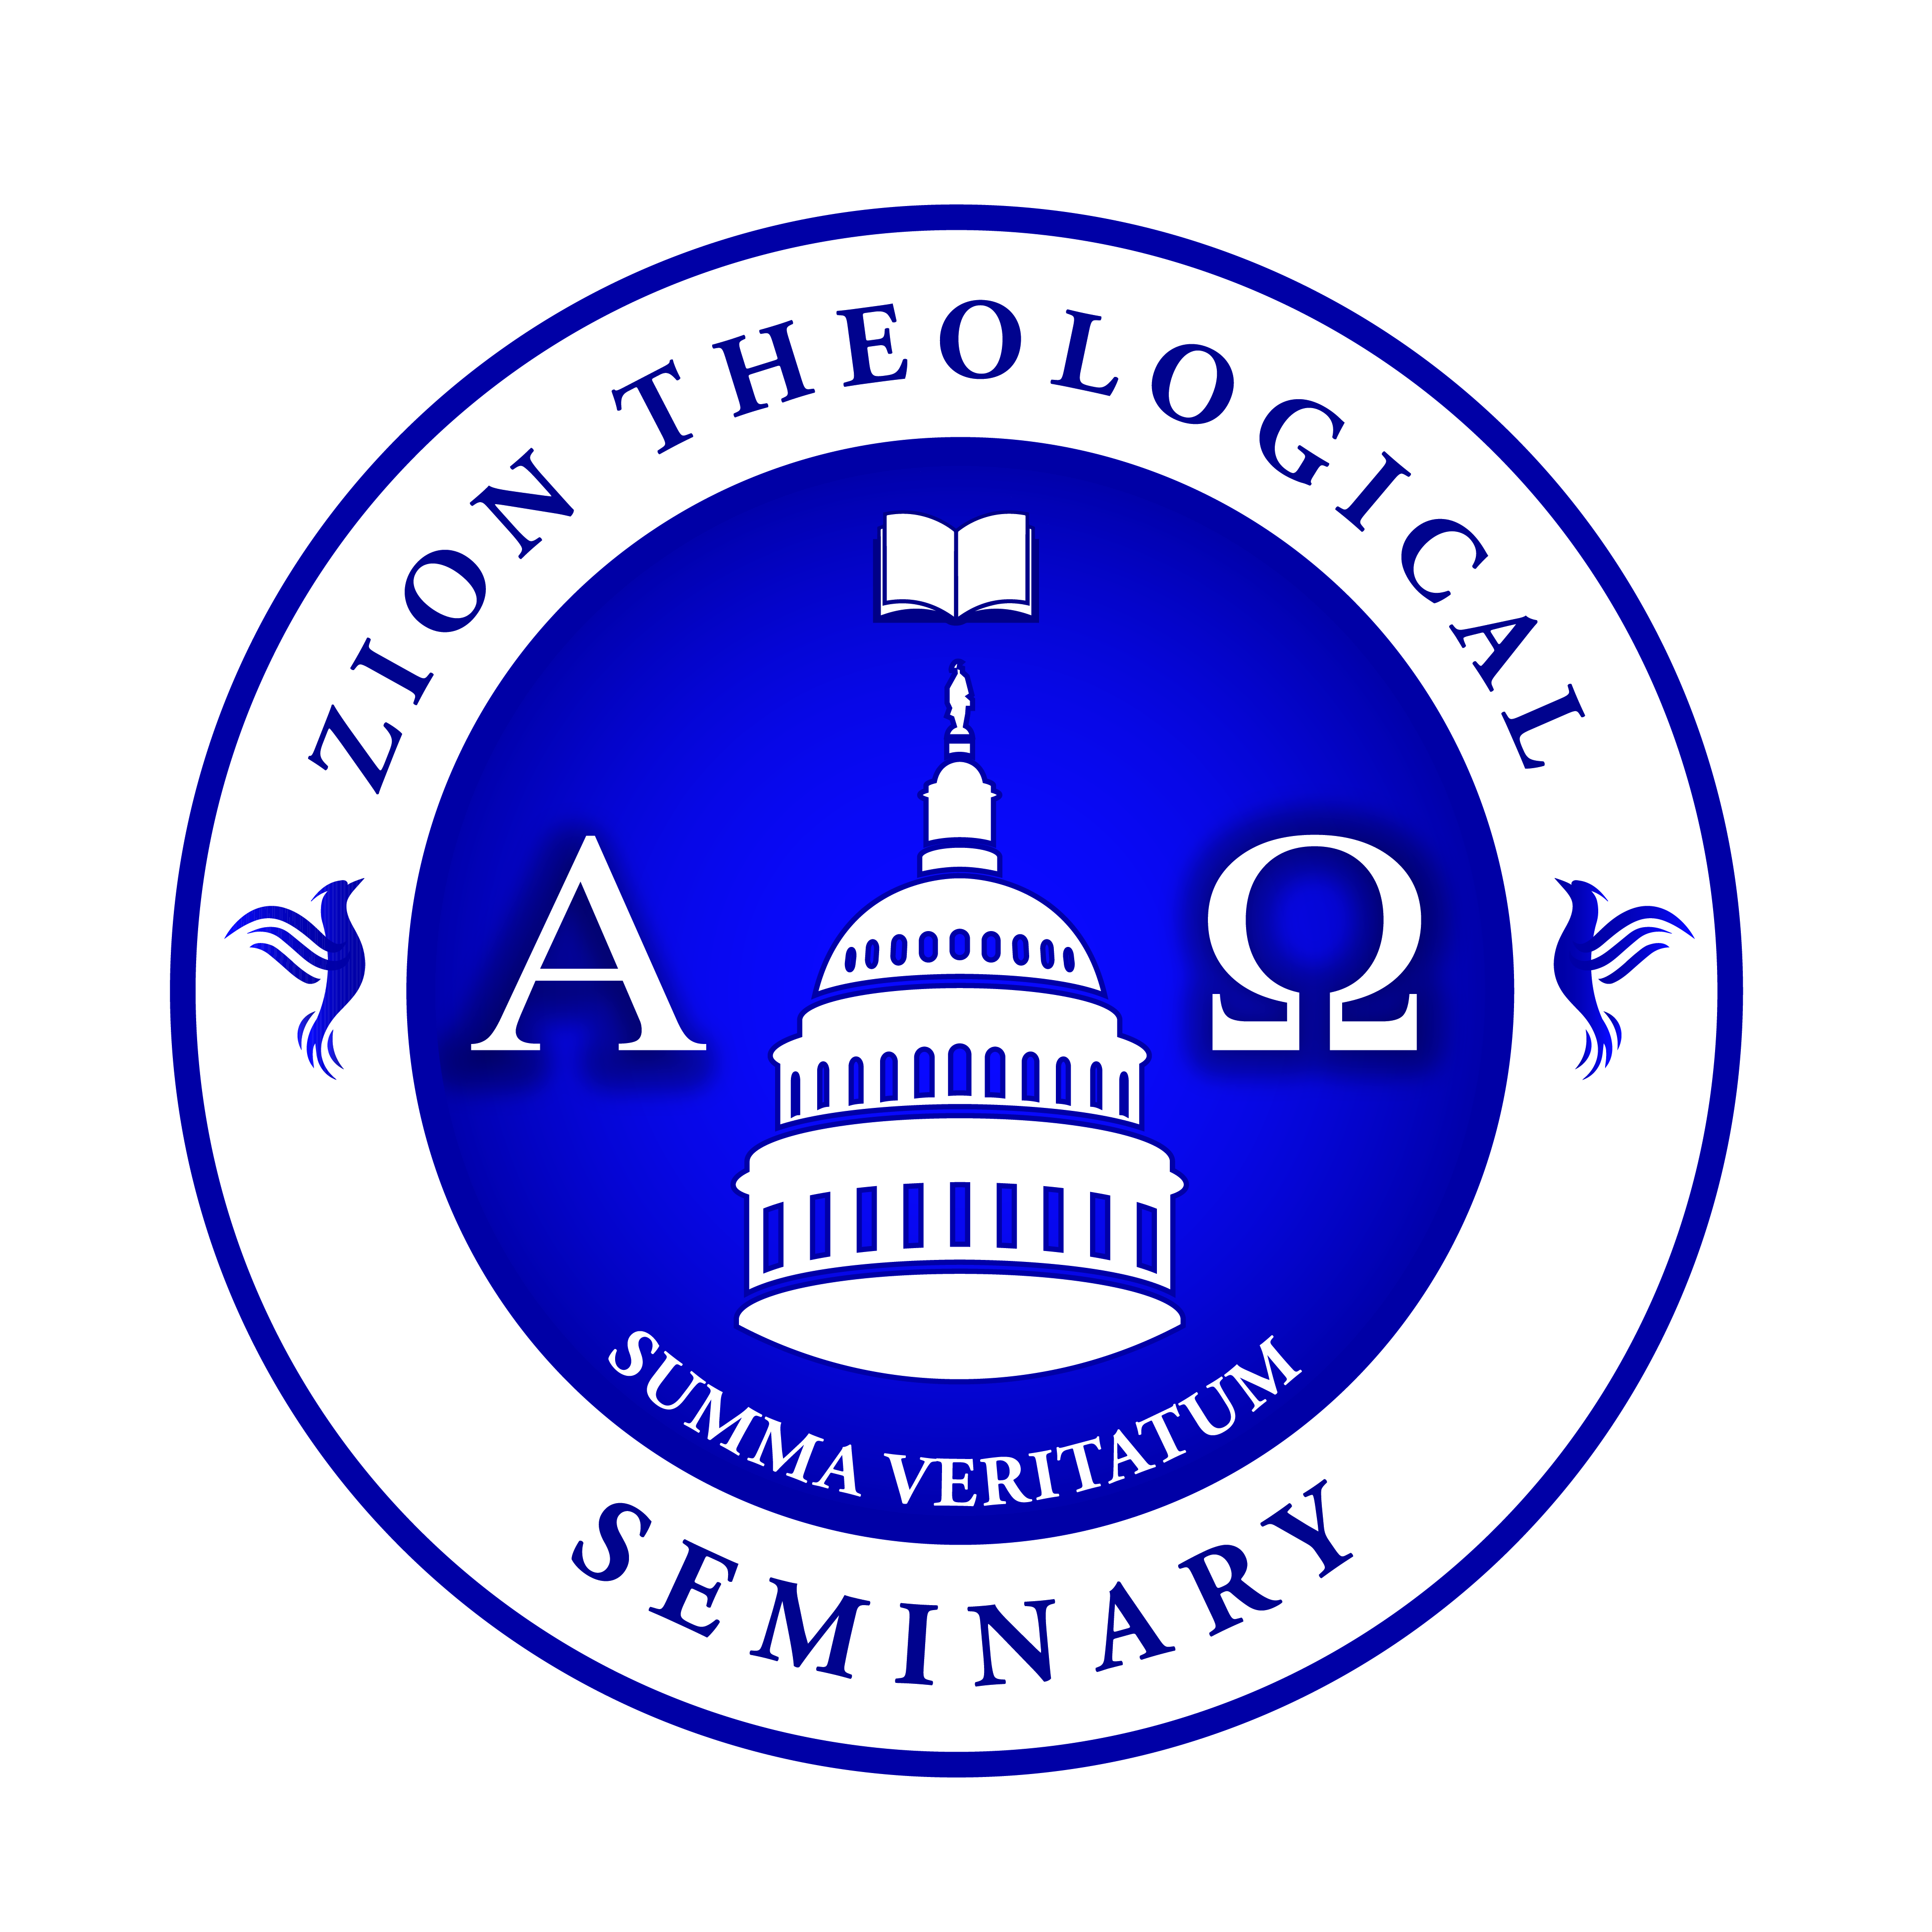 Zion Theological Seminary